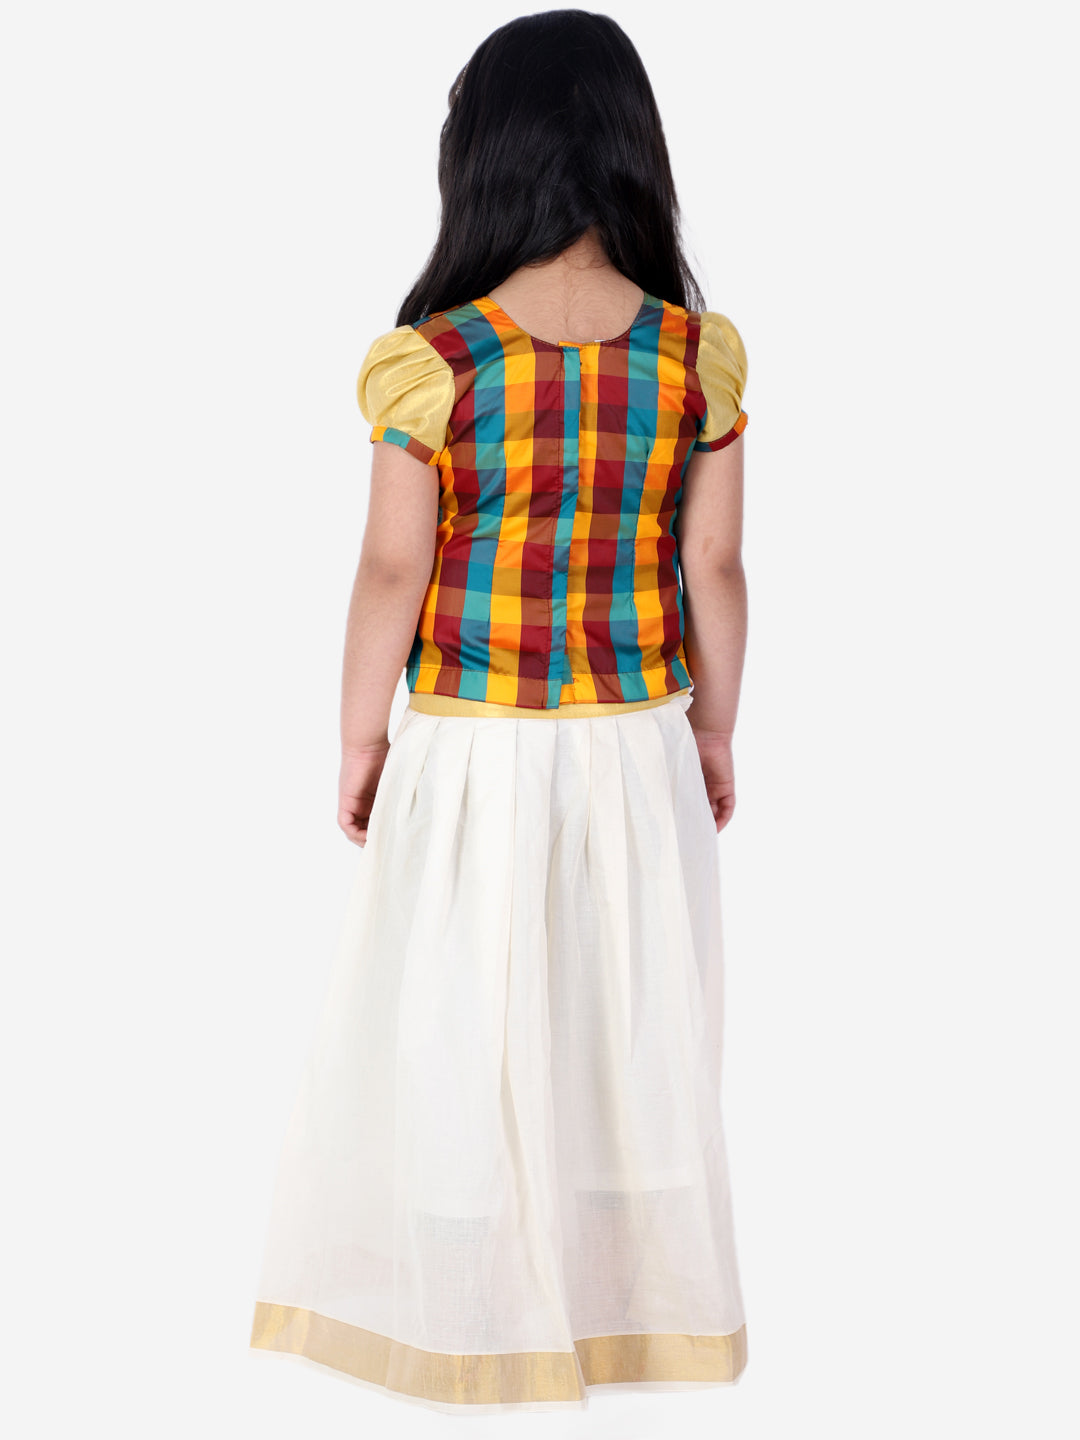 BownBee Puffed Sleeves Checkered Detail Pavda Pattu Lehenga Choli - Multicolor